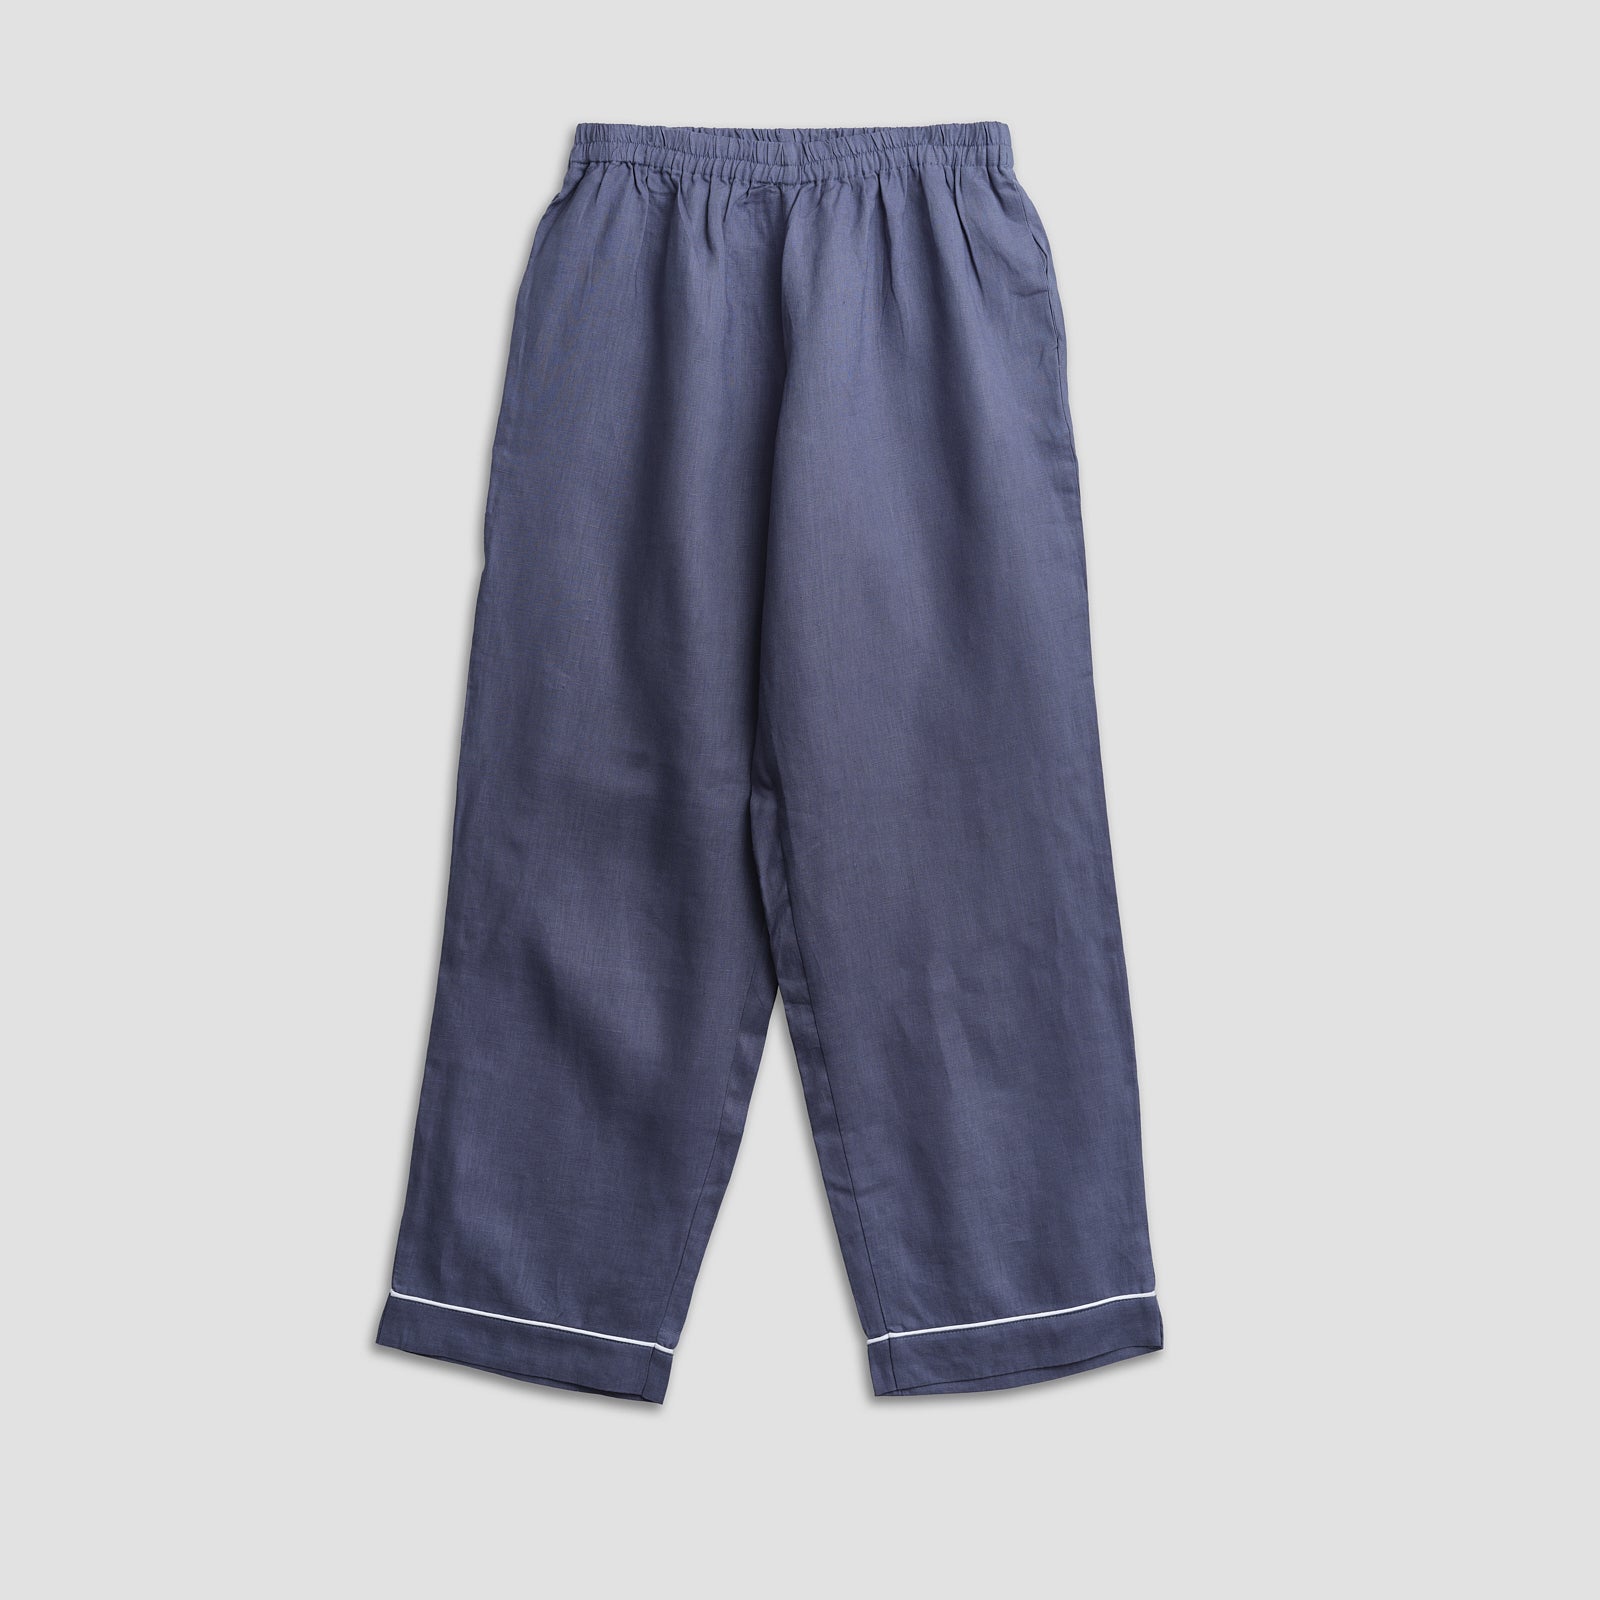 Men's Blueberry Linen Pajama Pants